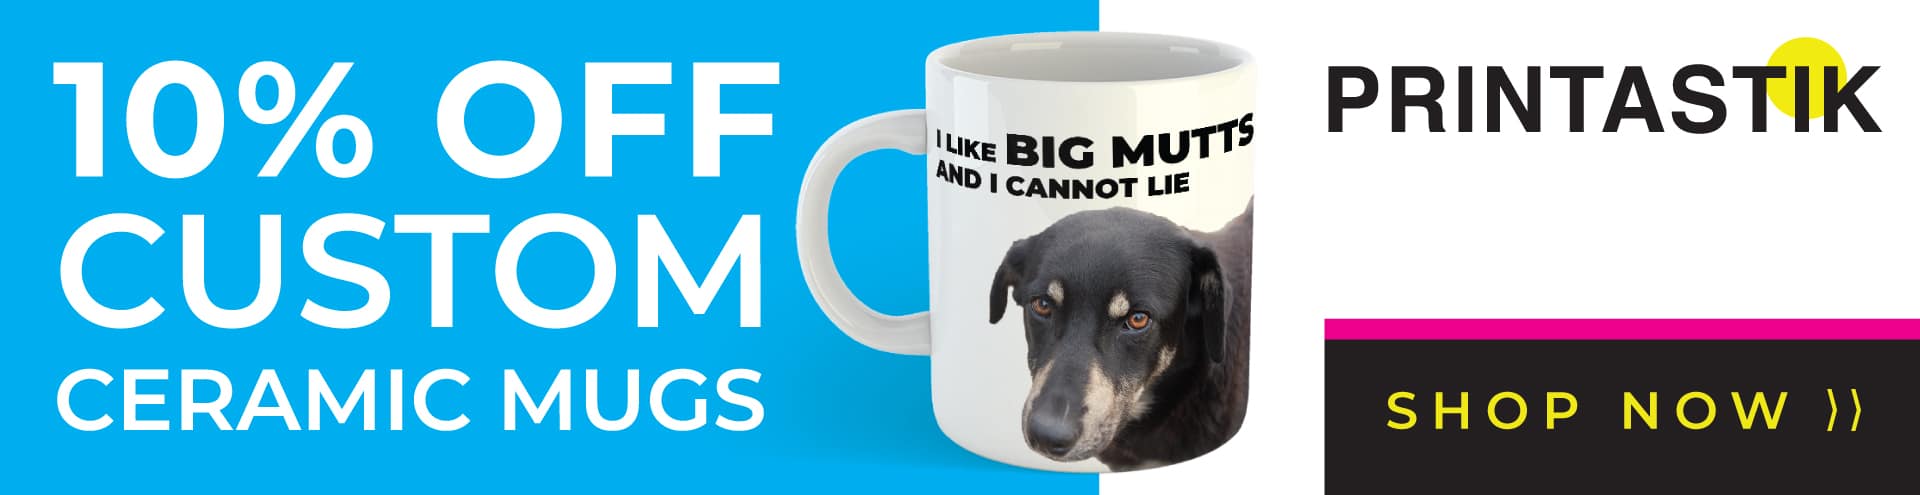 10% off custom mugs promotion online banner for Printastik of Edina, Minnesota.